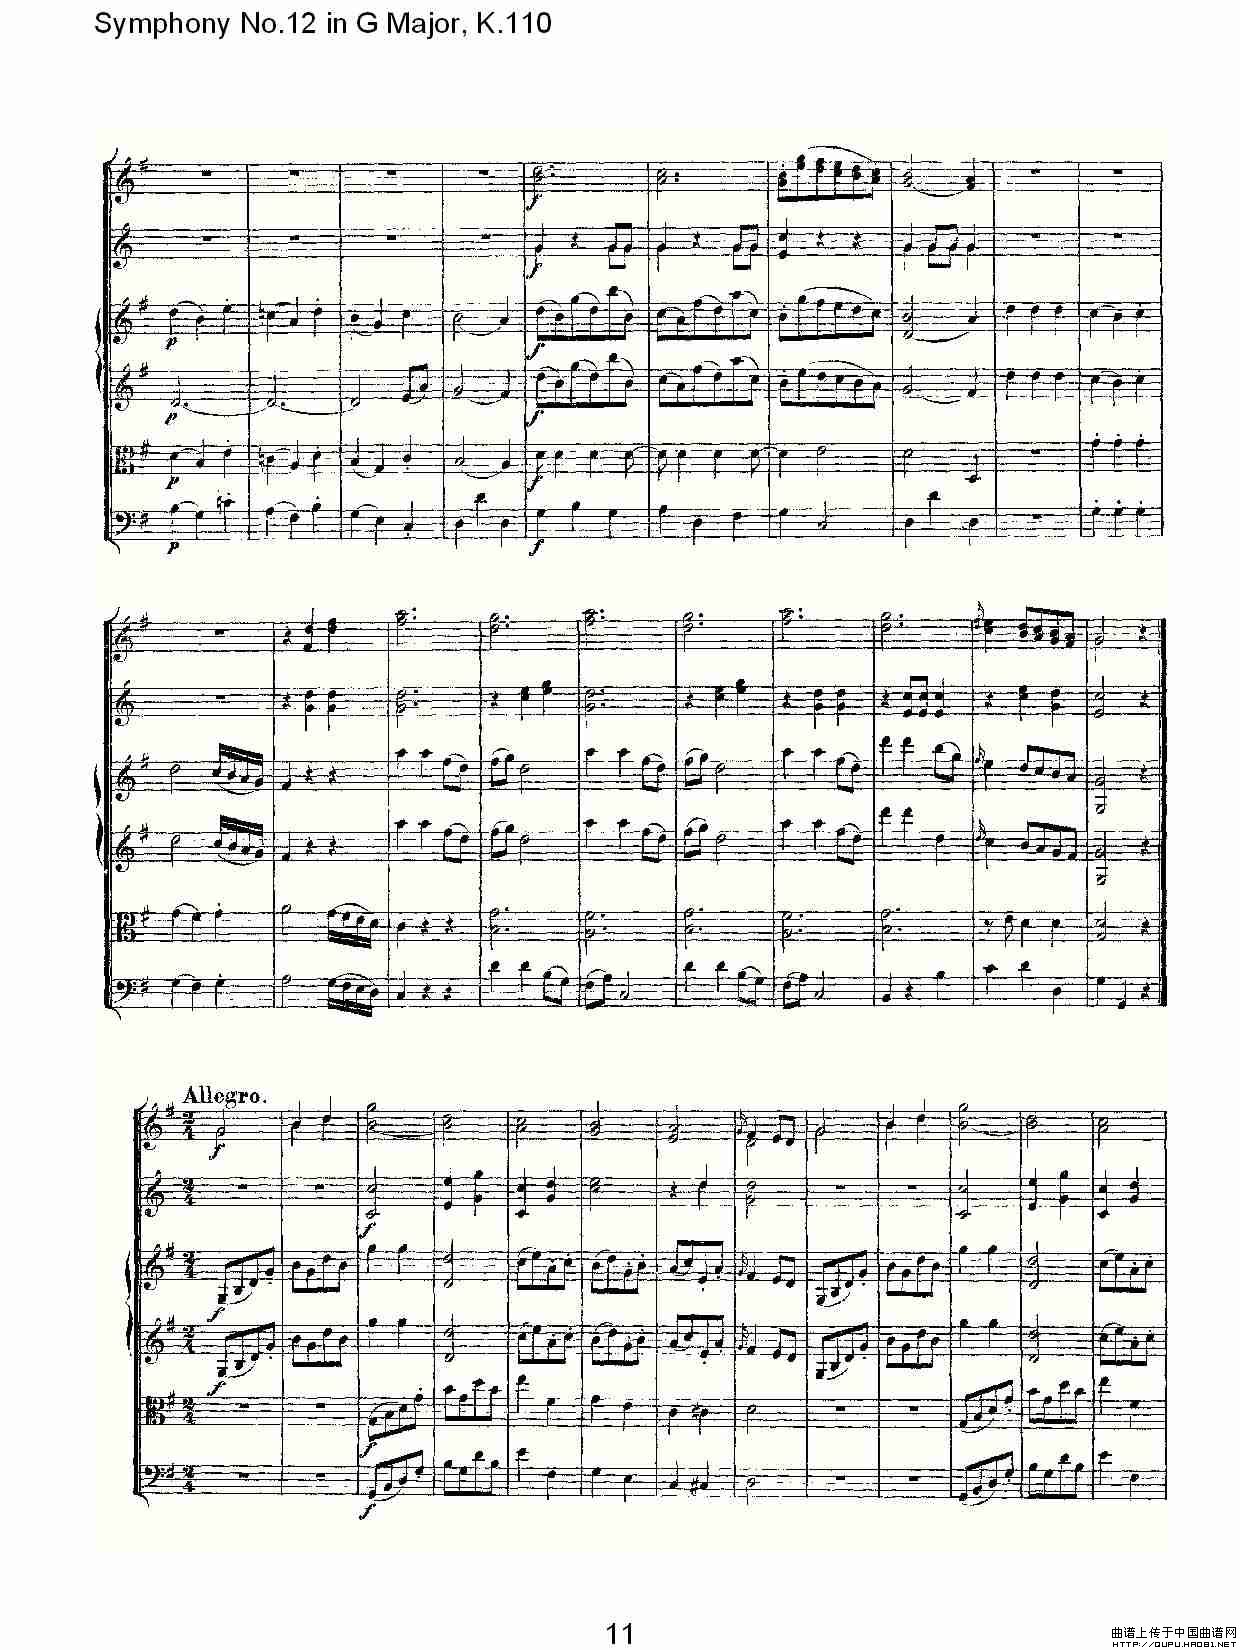 Symphony No.12 in G Major, K.110（G大调第十二交响曲K